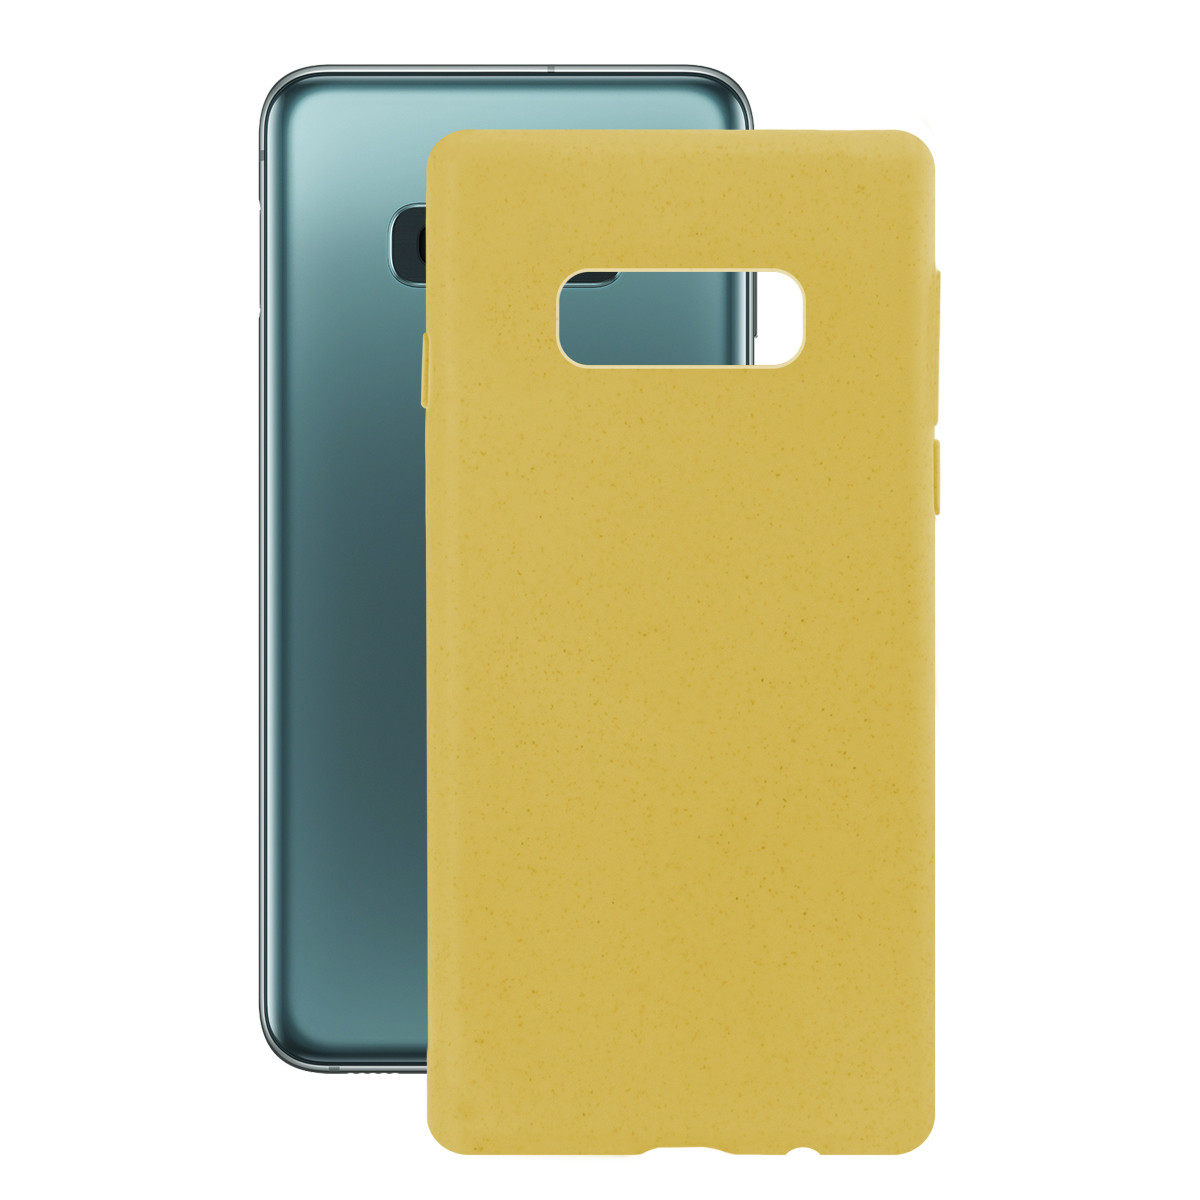 Husa Cover Soft Ksix Eco-Friendly pentru Samsung Galaxy S10e Galben thumb